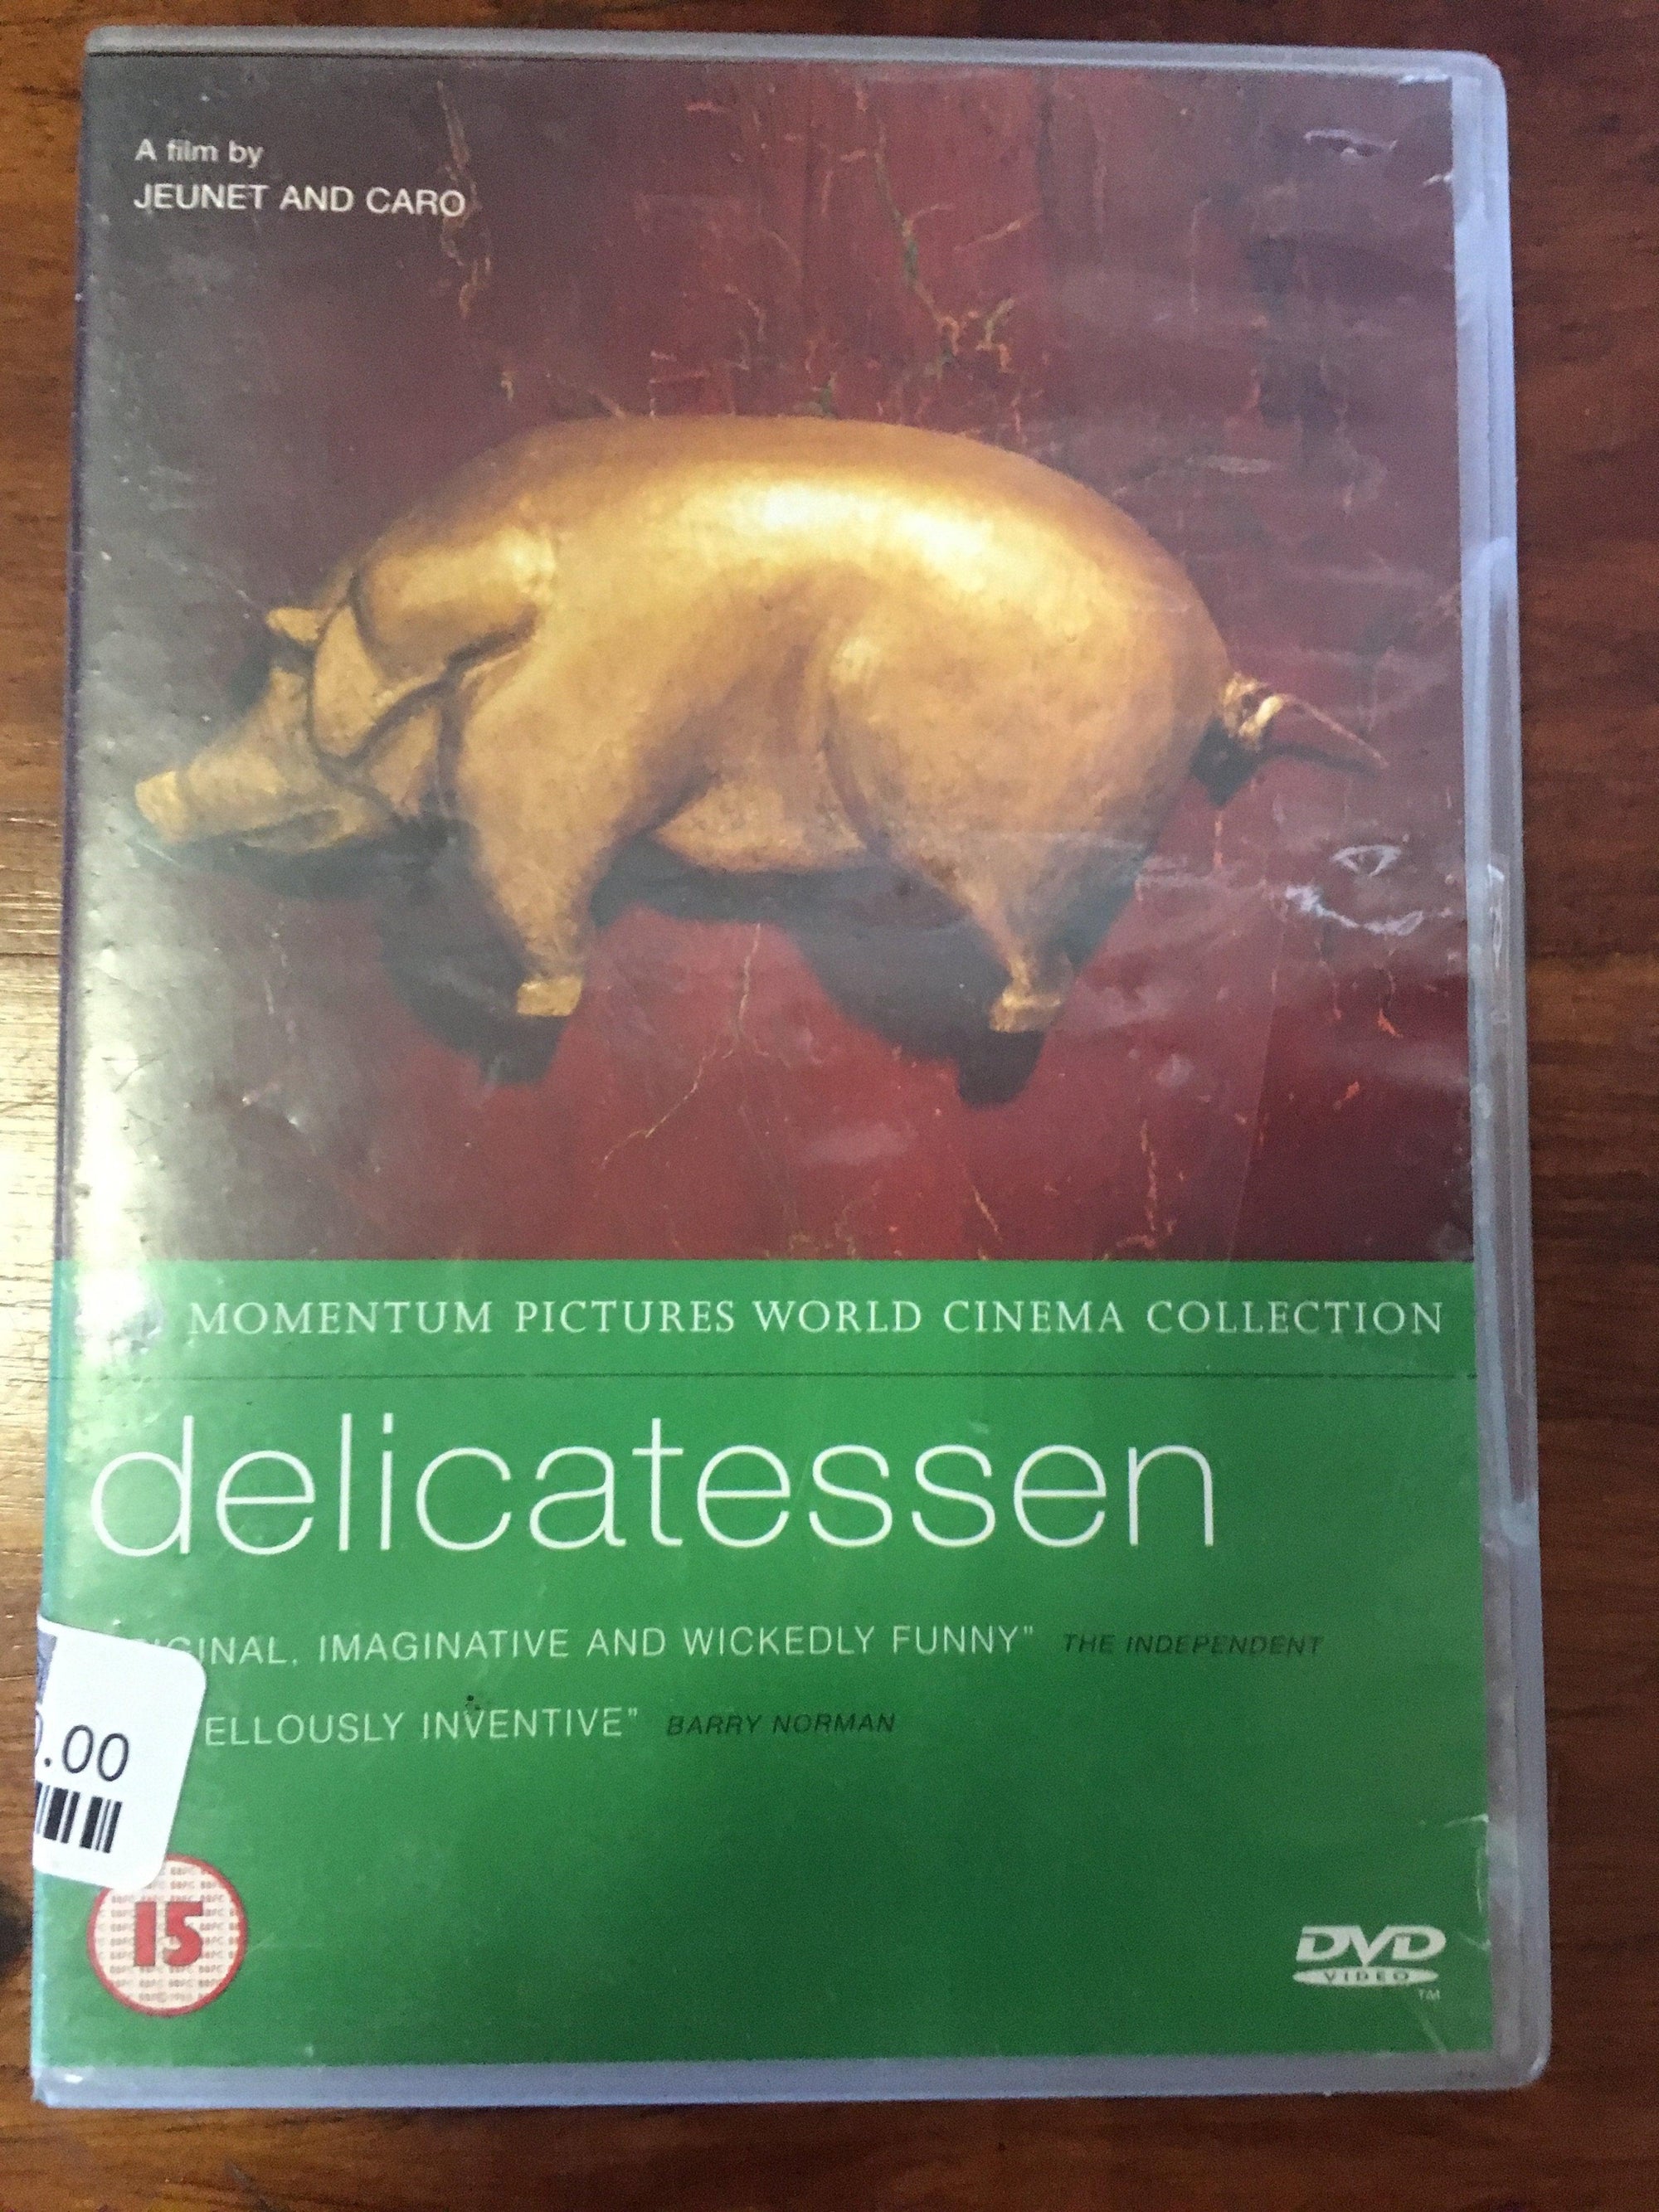 Delicatessen (Dominique Piñon) - DVD - 2ndhandwarehouse.com